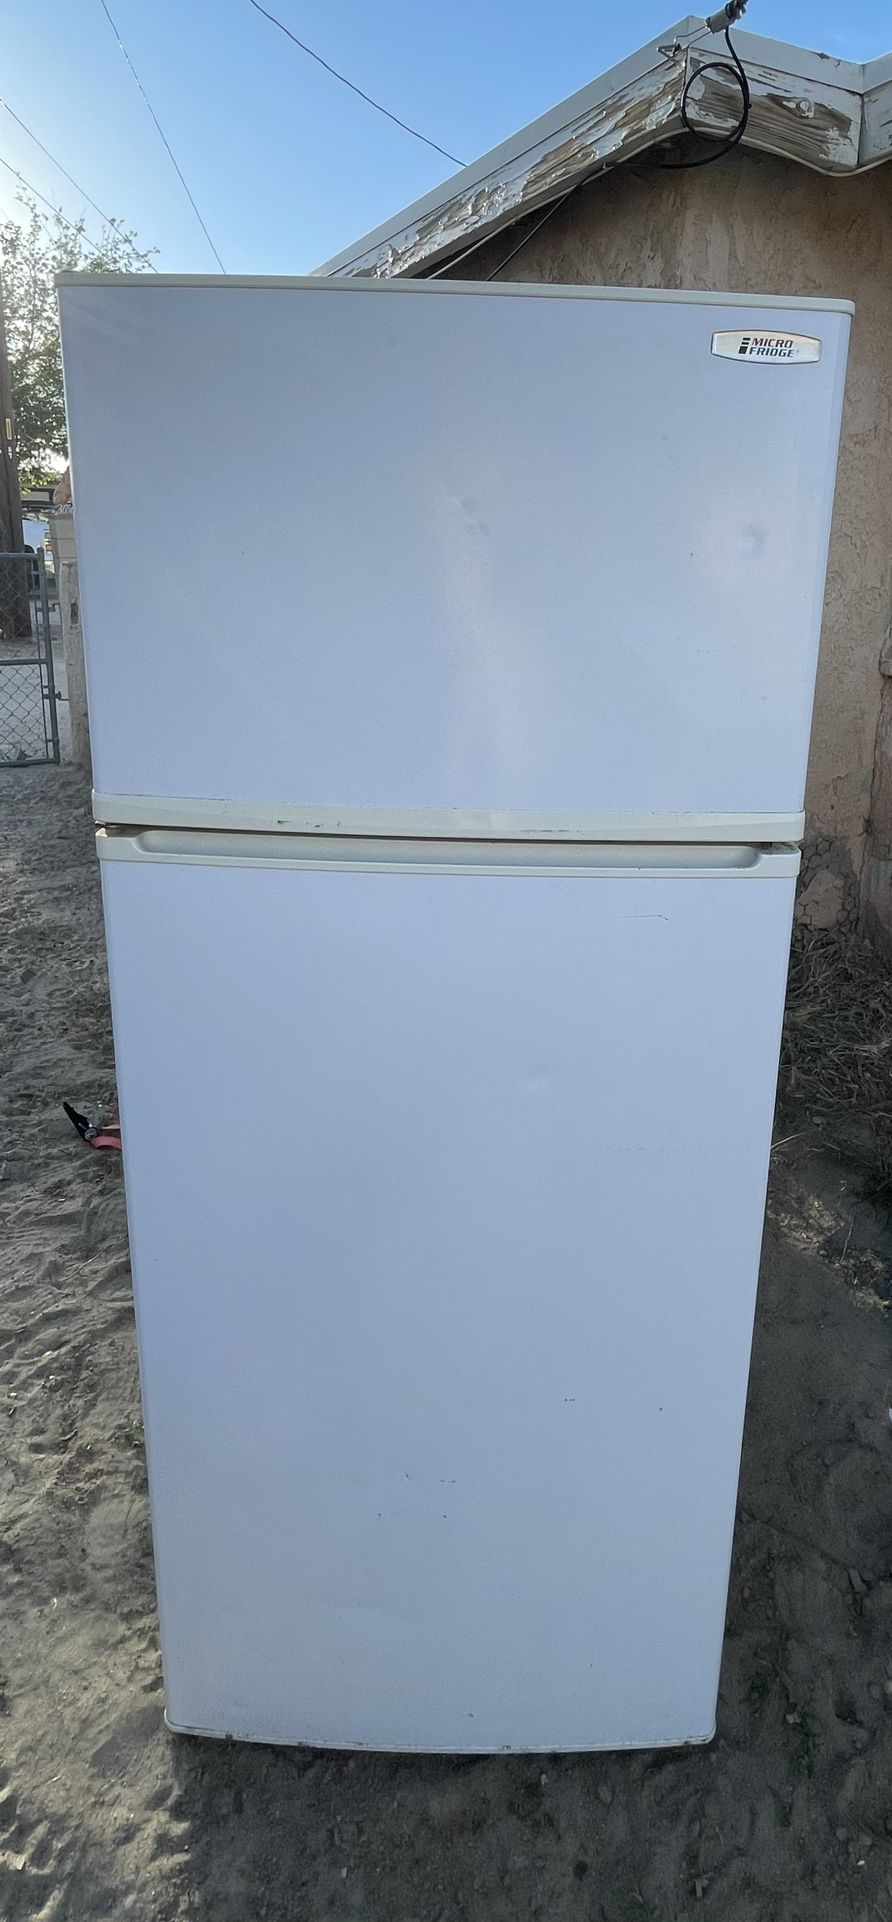 24” Wide Refrigerator 